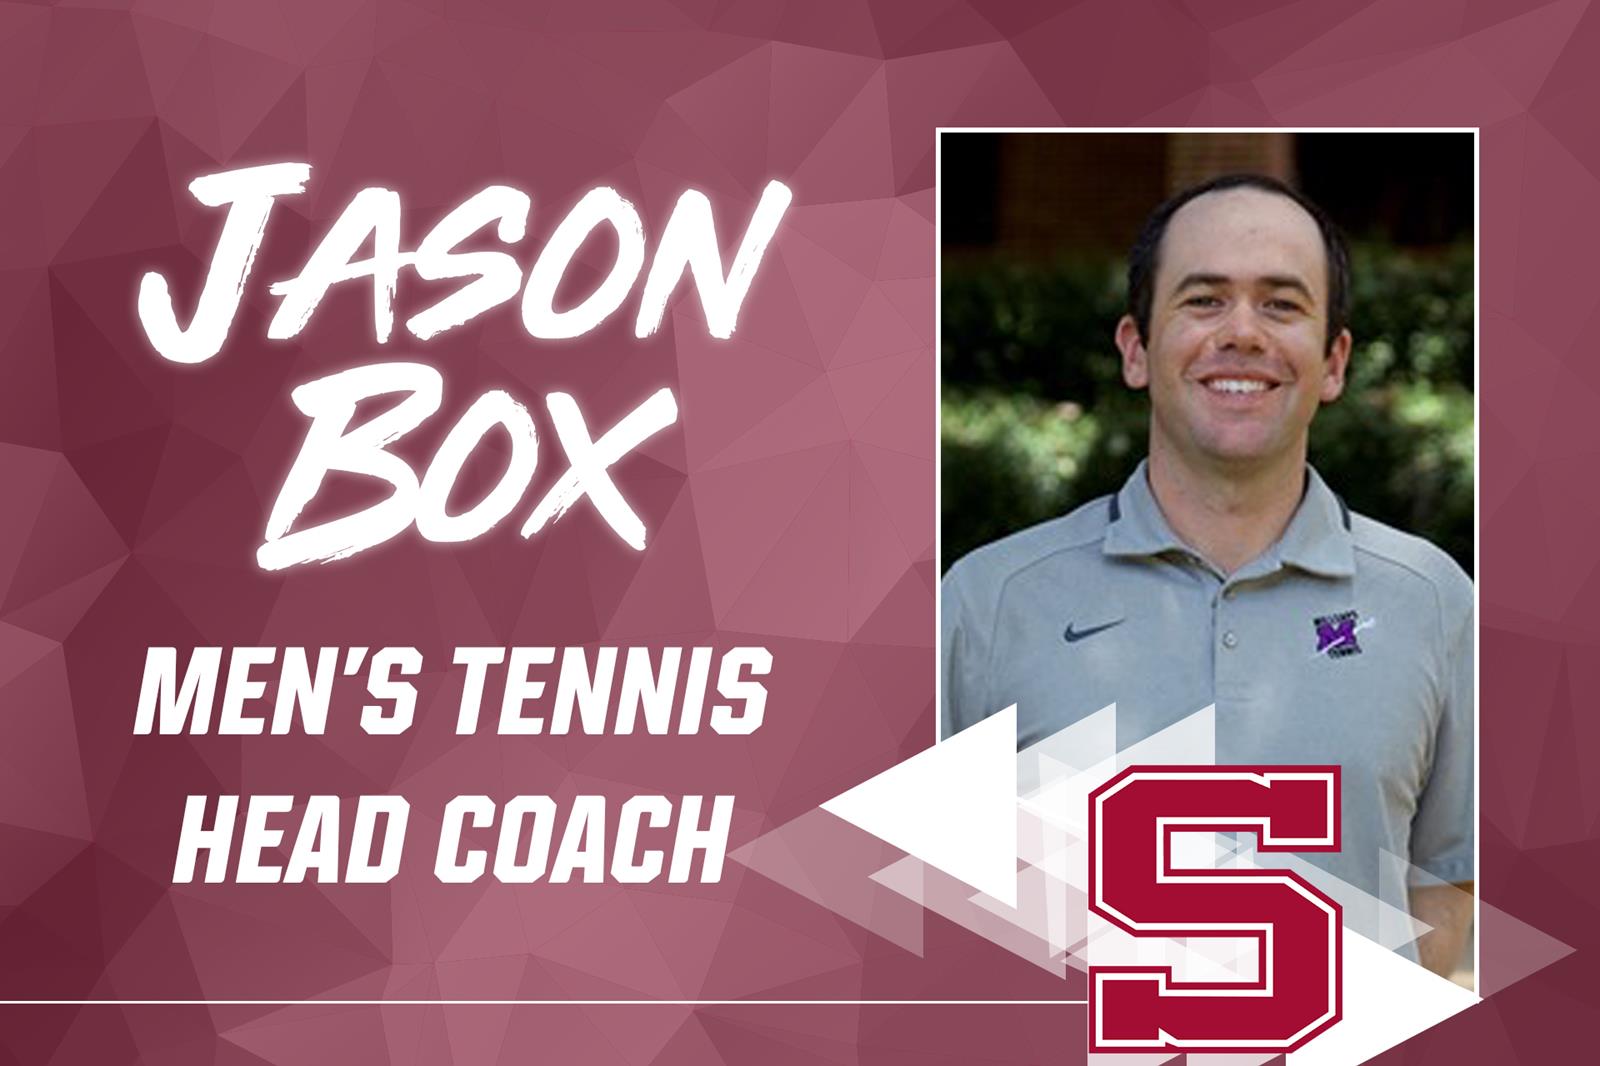 Jason Box Named Men's Tennis Coach at Swarthmore